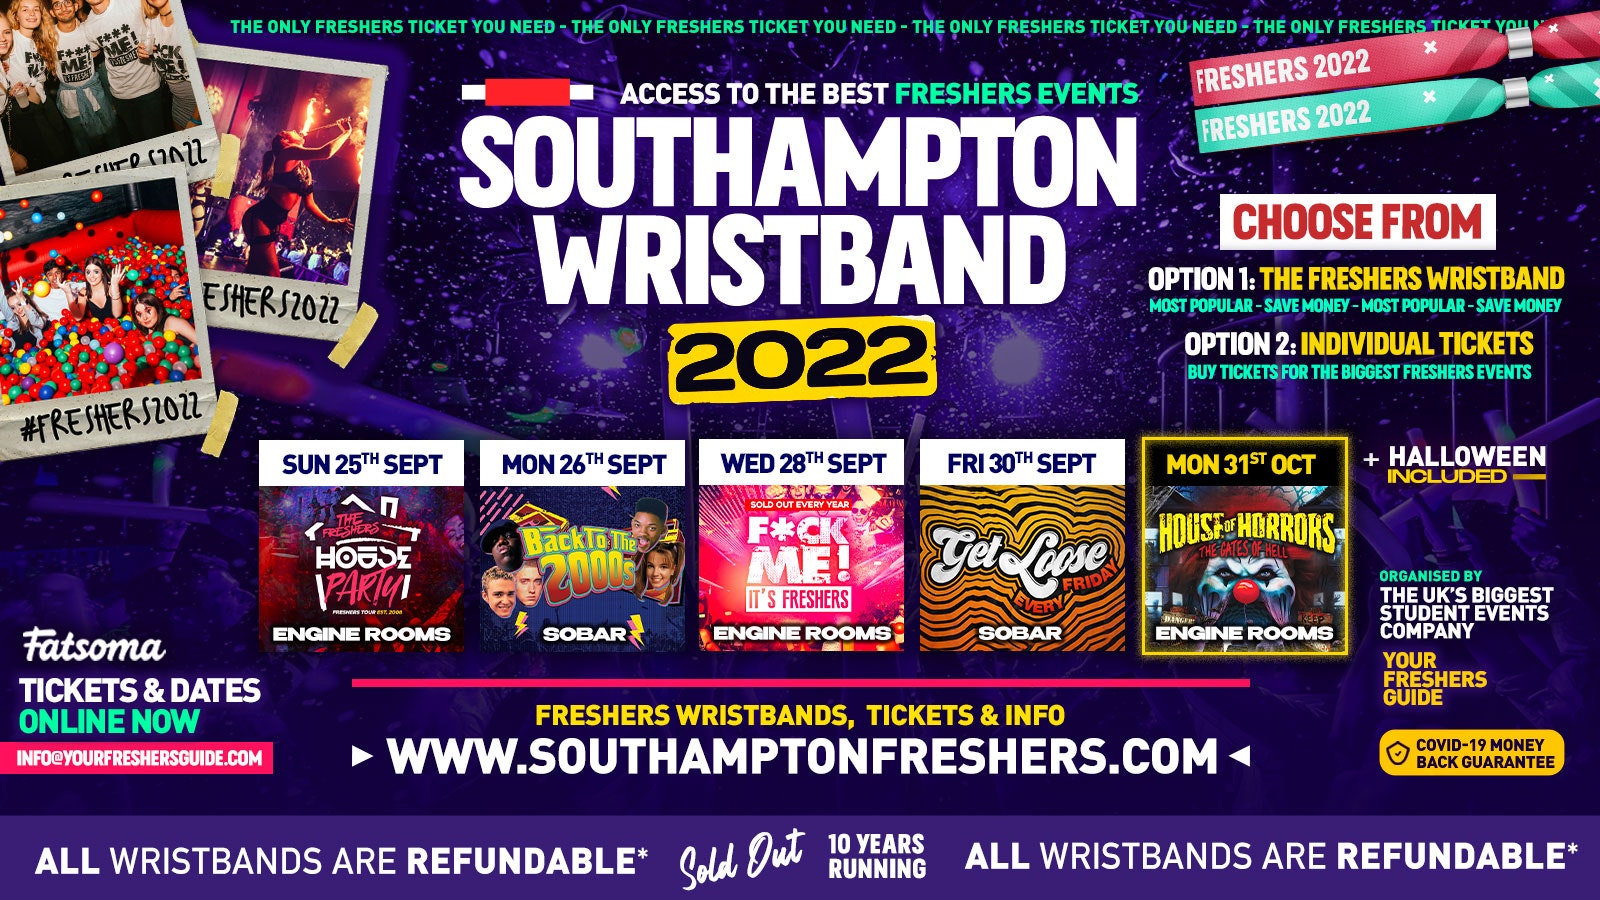 The Southampton Freshers Wristband / Southampton Freshers 2022 – ⚠️LAST 50 WRISTBANDS⚠️